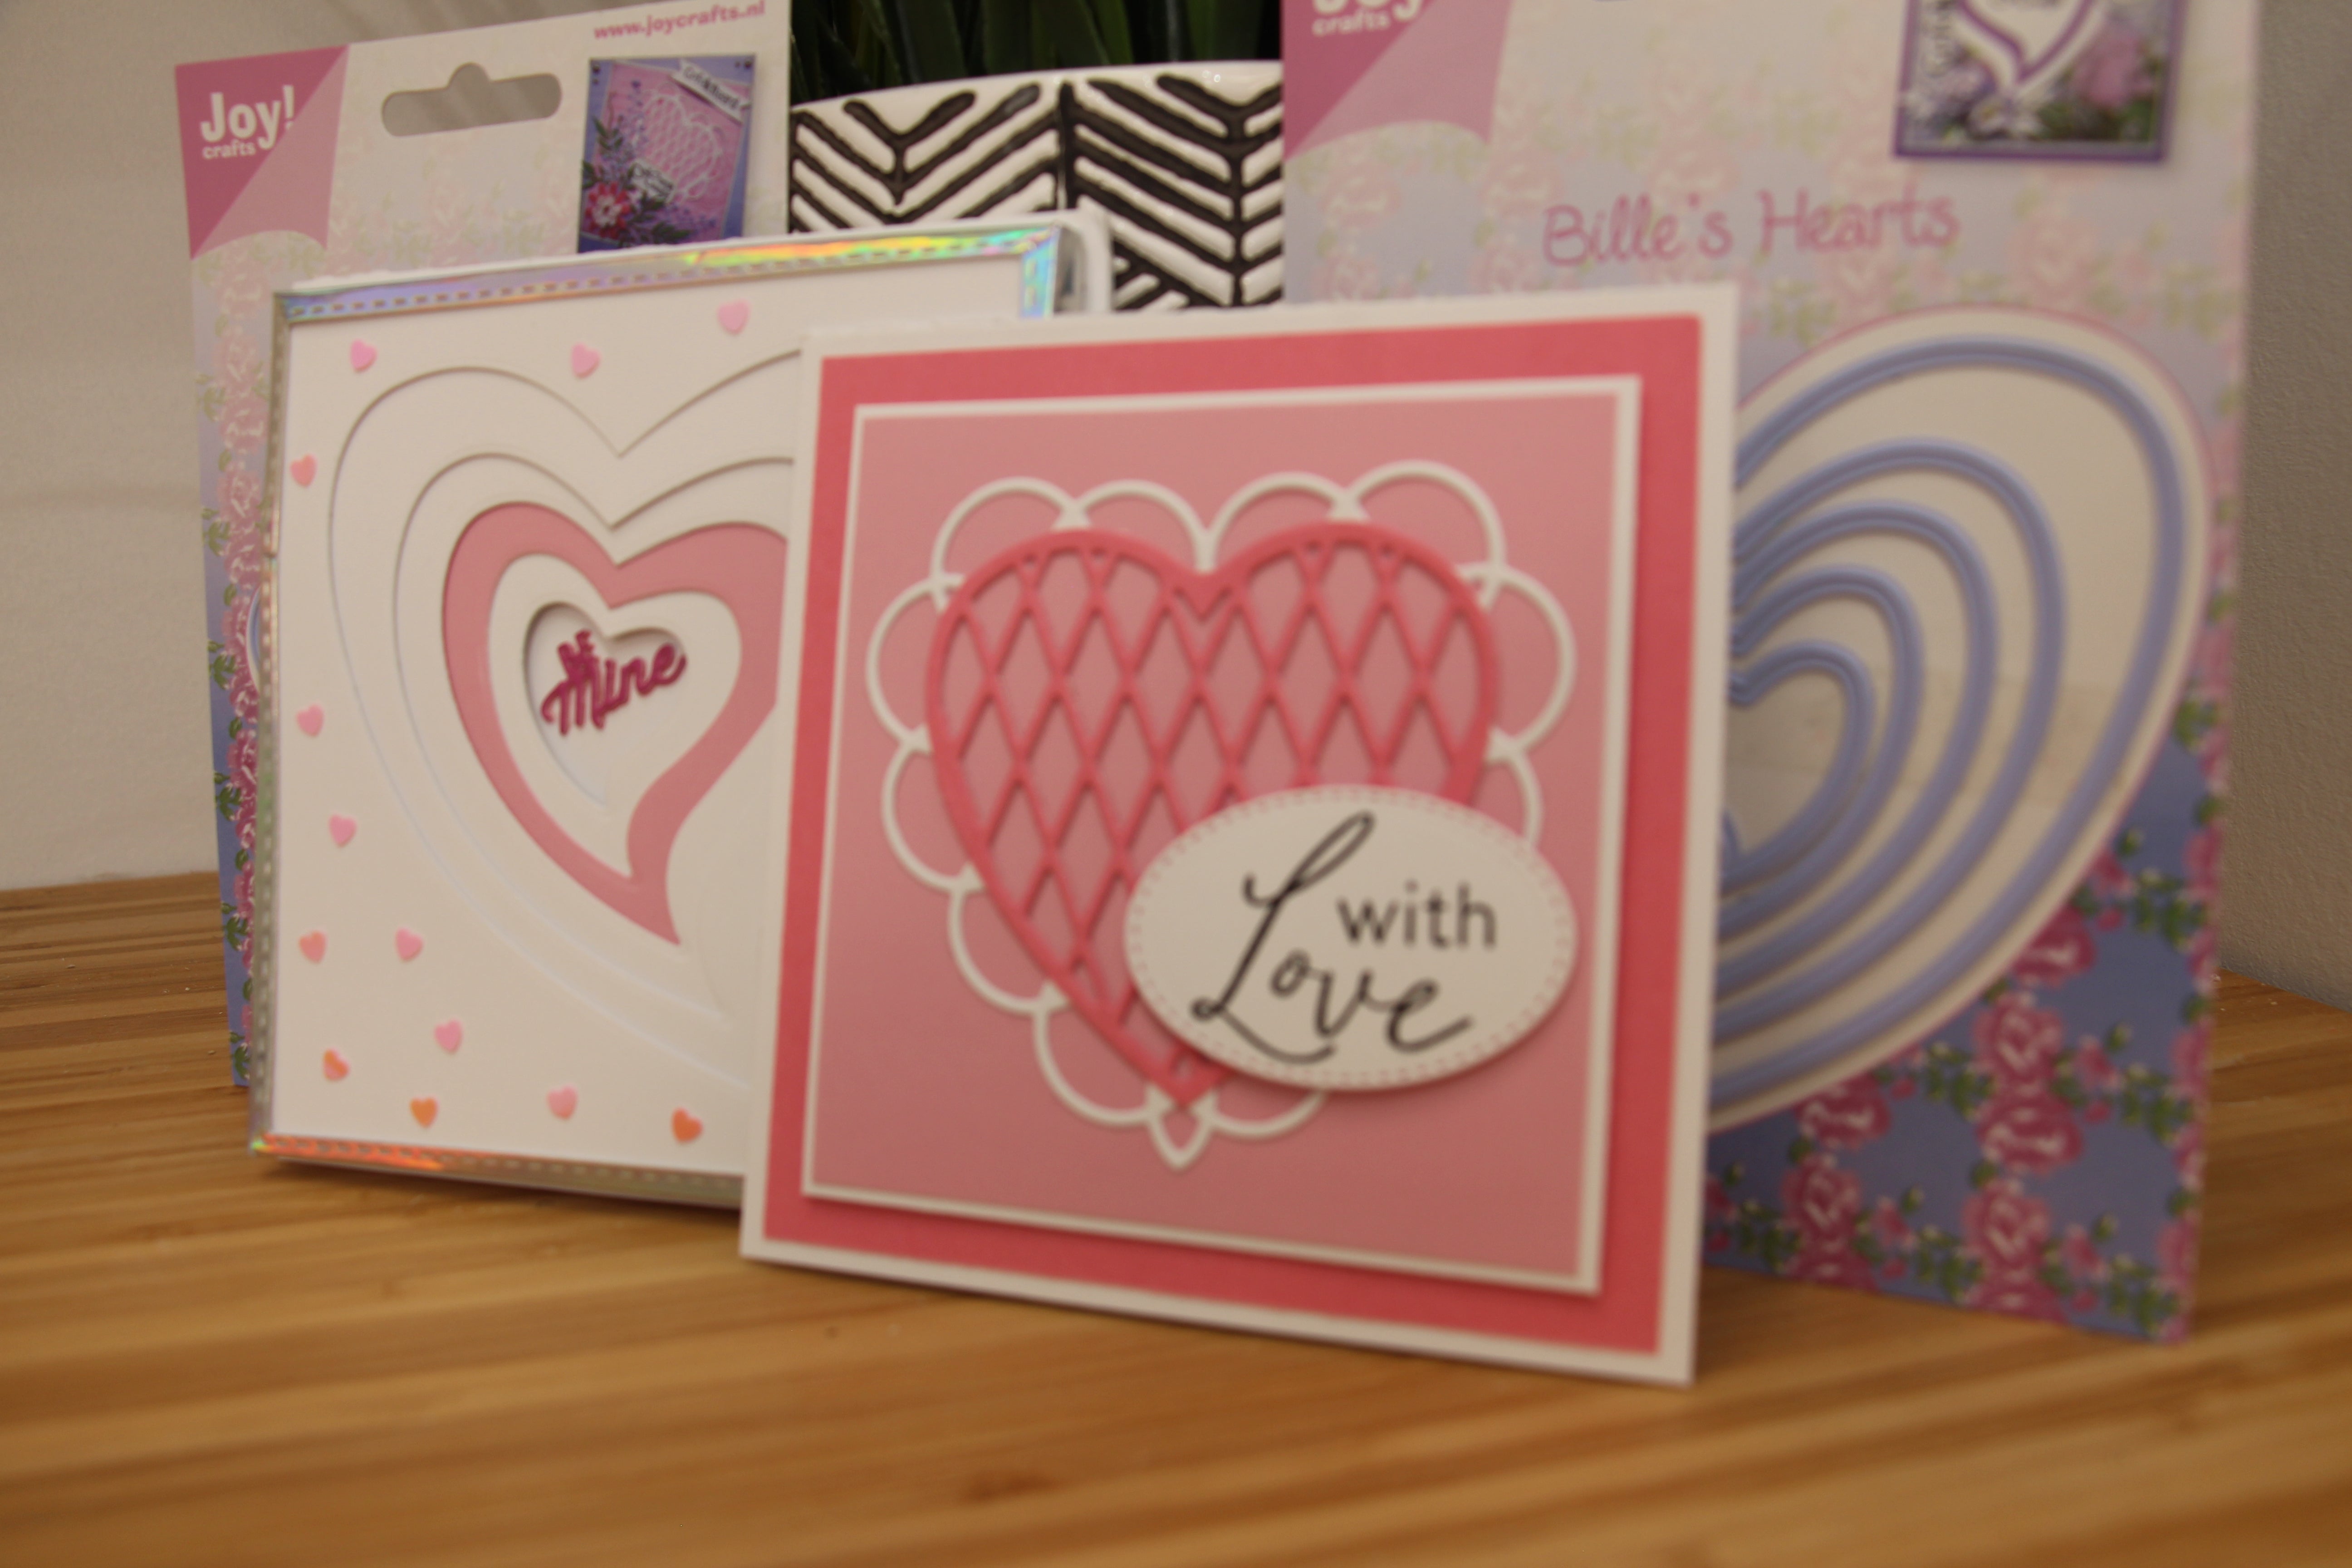 Joy! Crafts Billie's Heart Card - January 27th